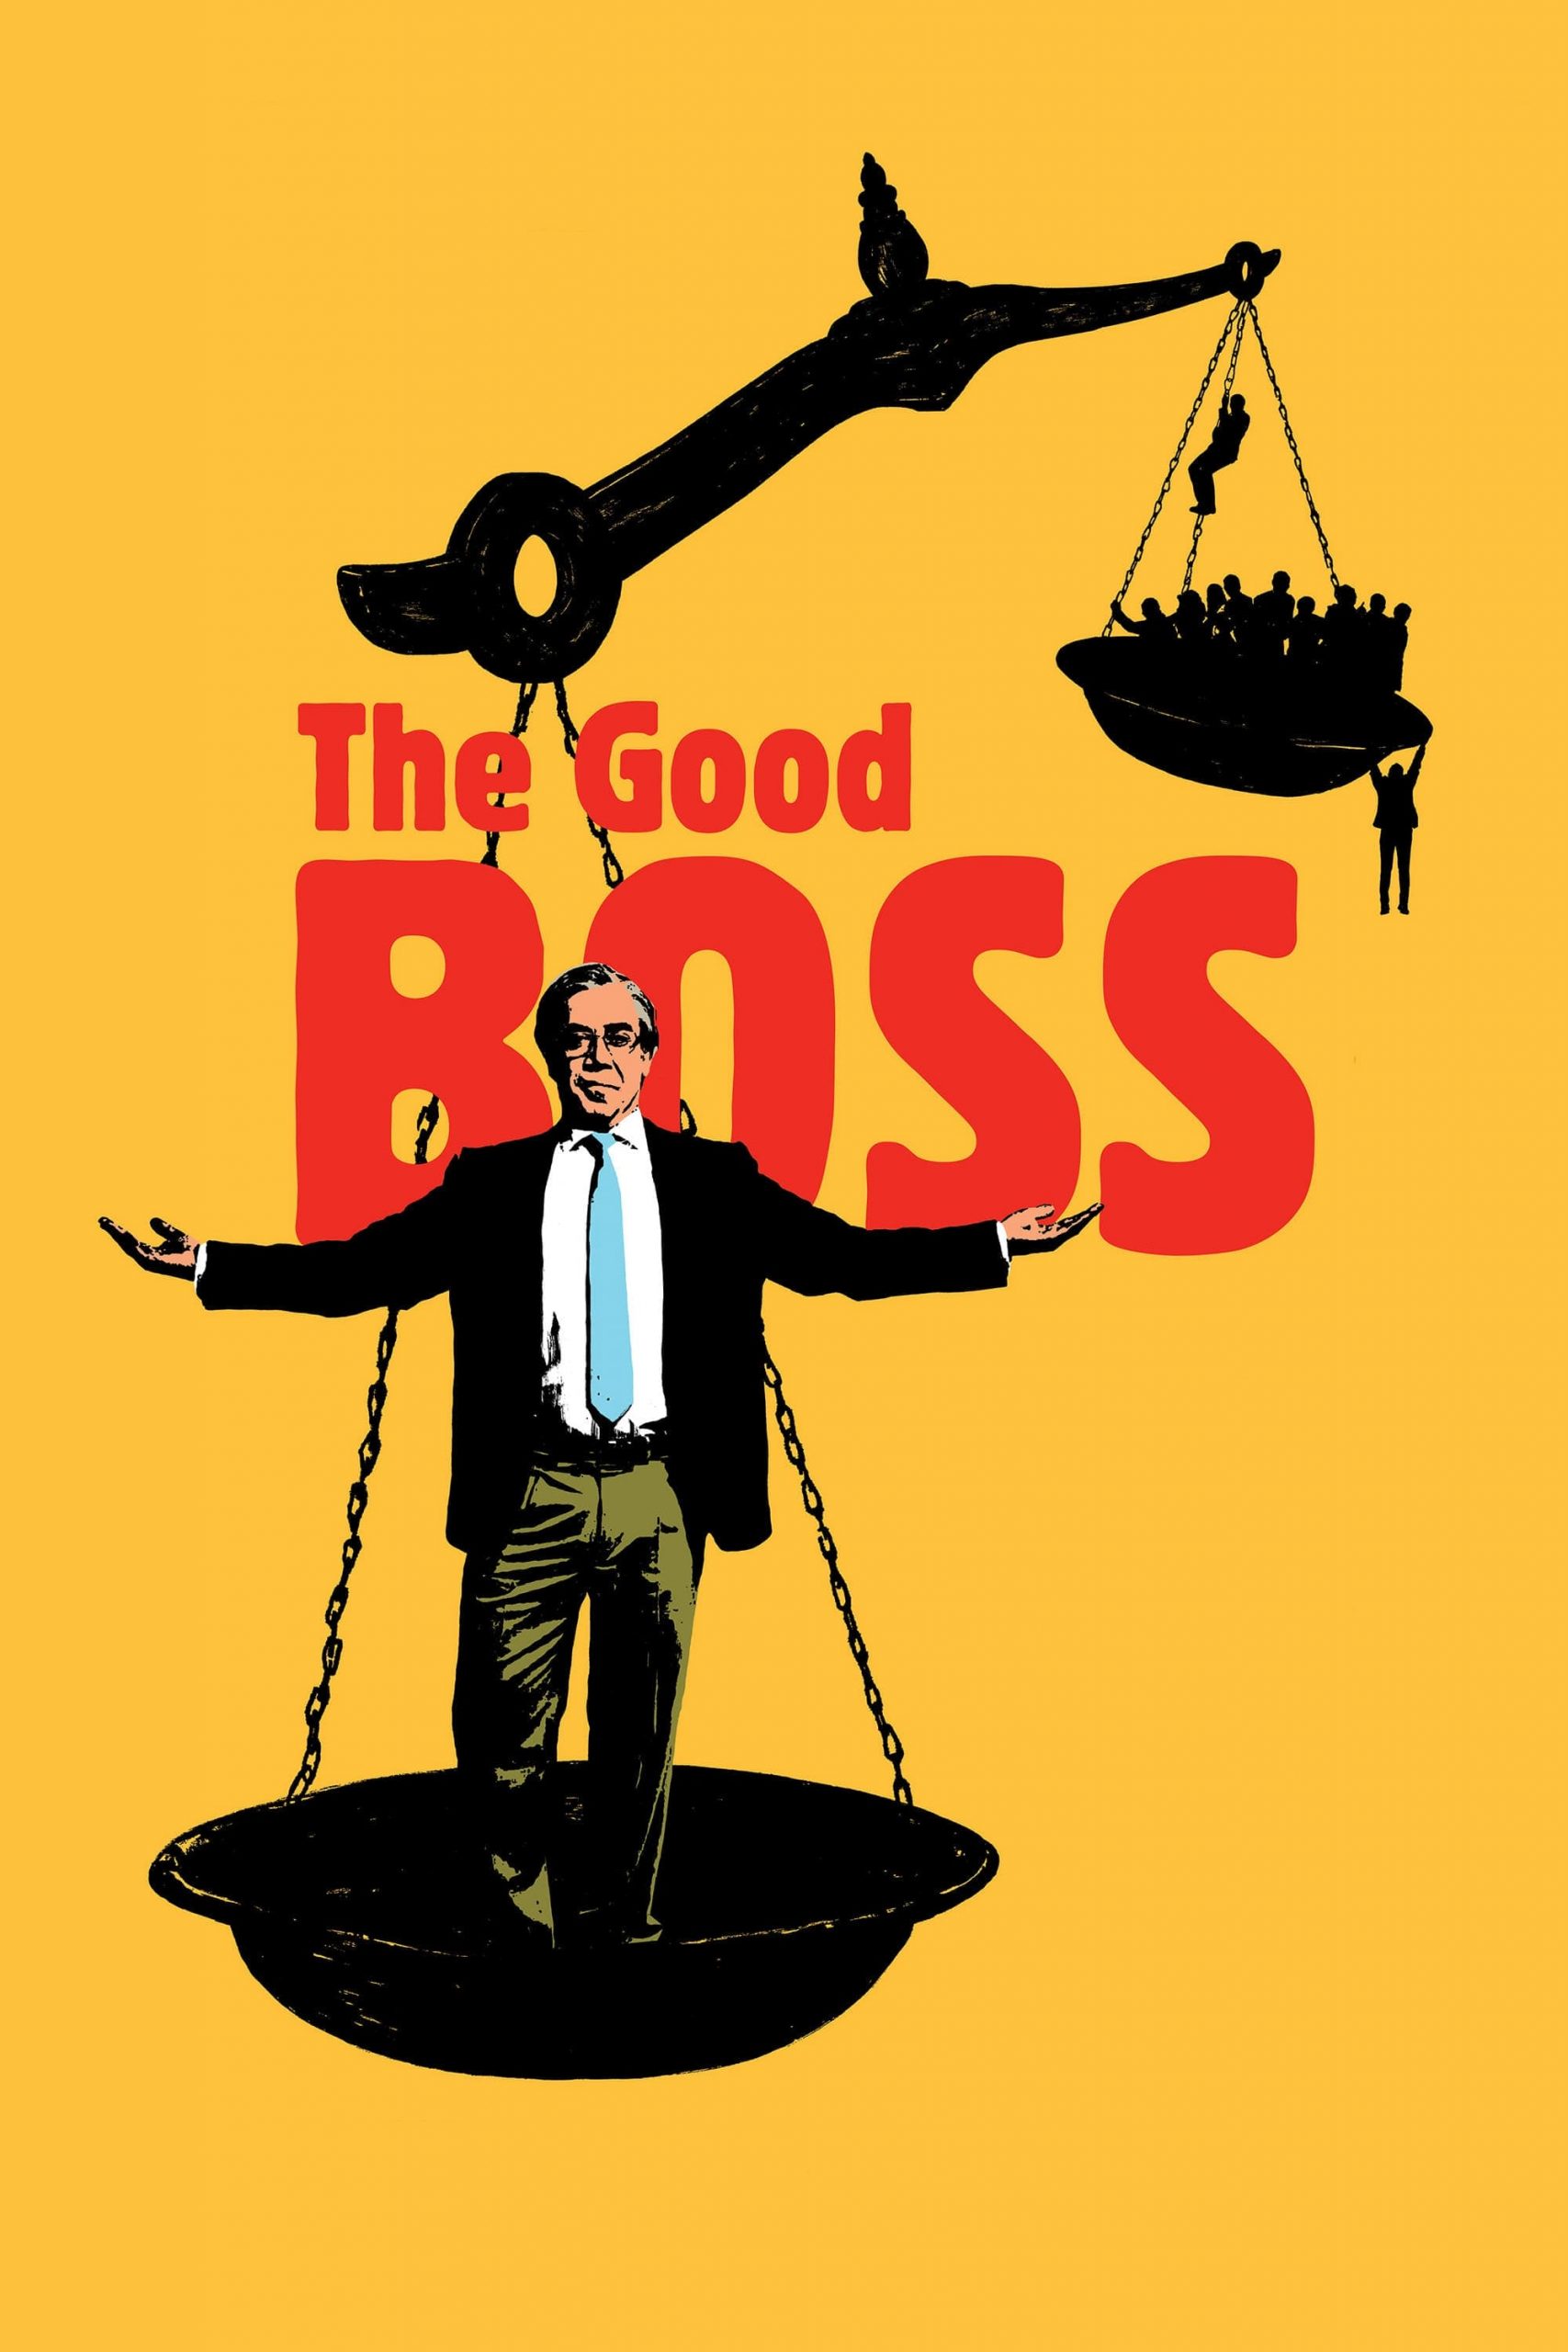 The-Good-Boss-image.jpg